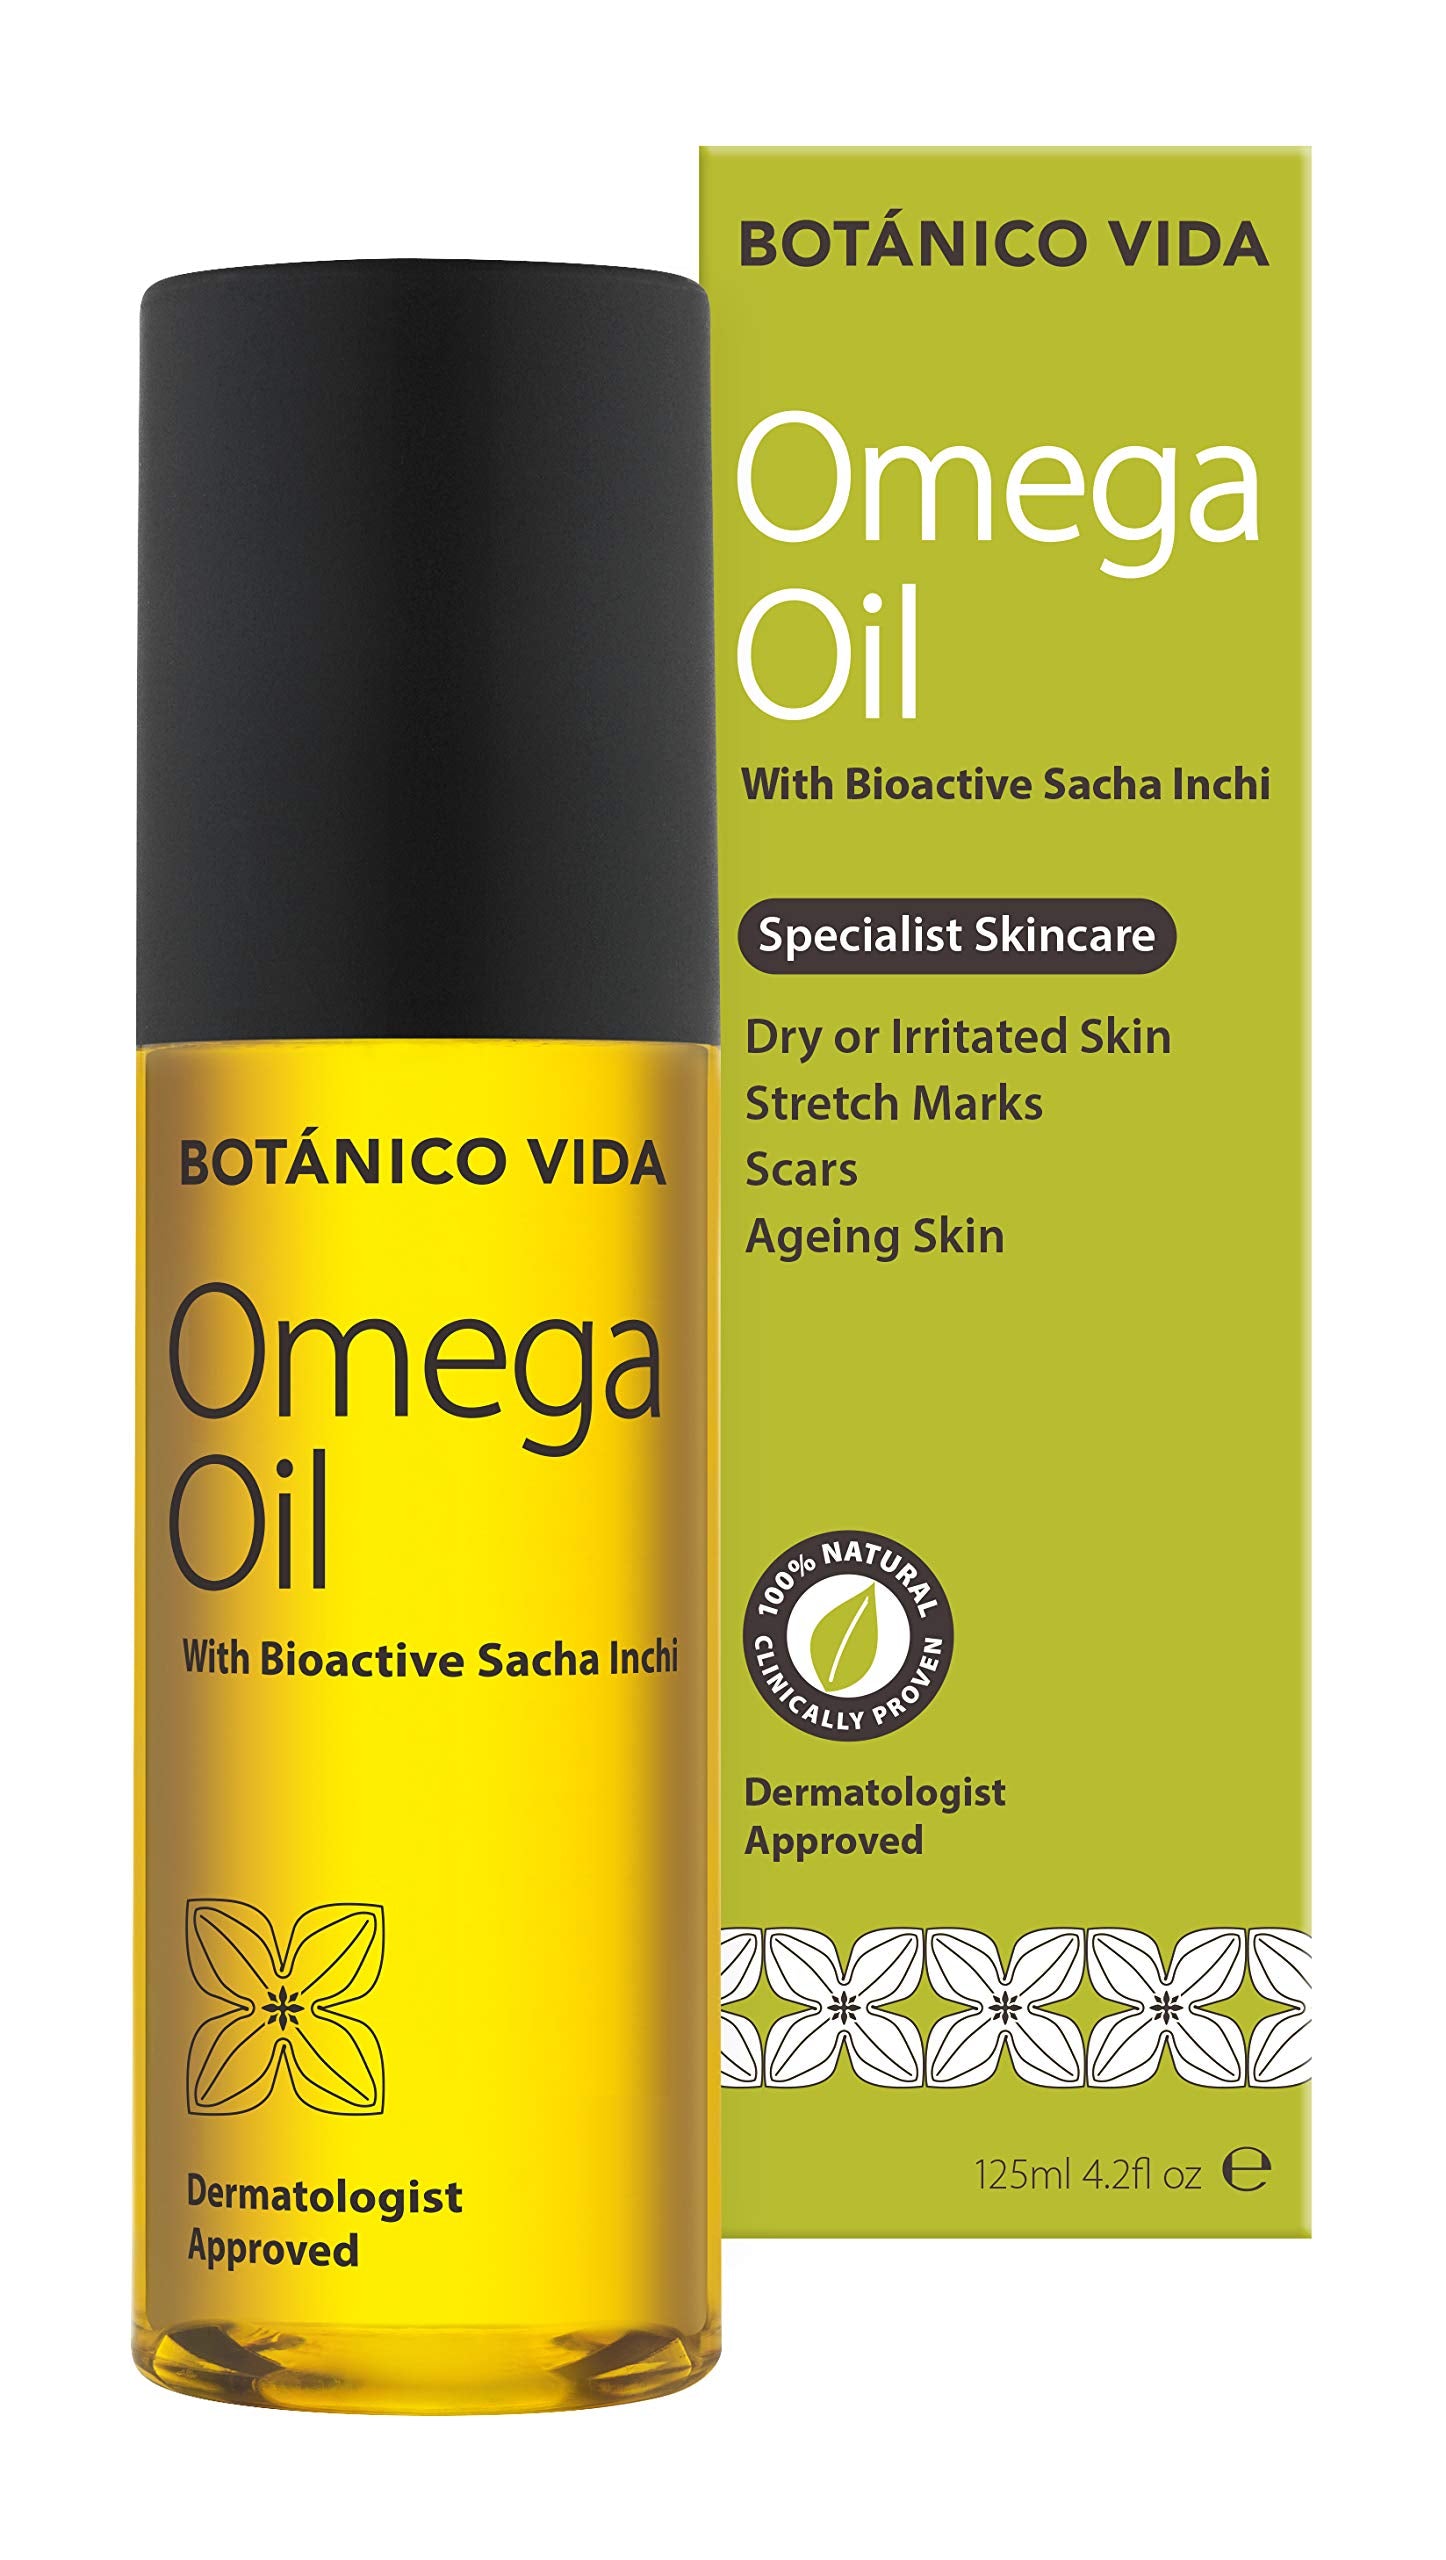 Botanico Vida Omega Oil. The 100% Natural Body Oil for Stretch Marks, Scars, Dry Skin. Clinically Proven Skincare, 125ml